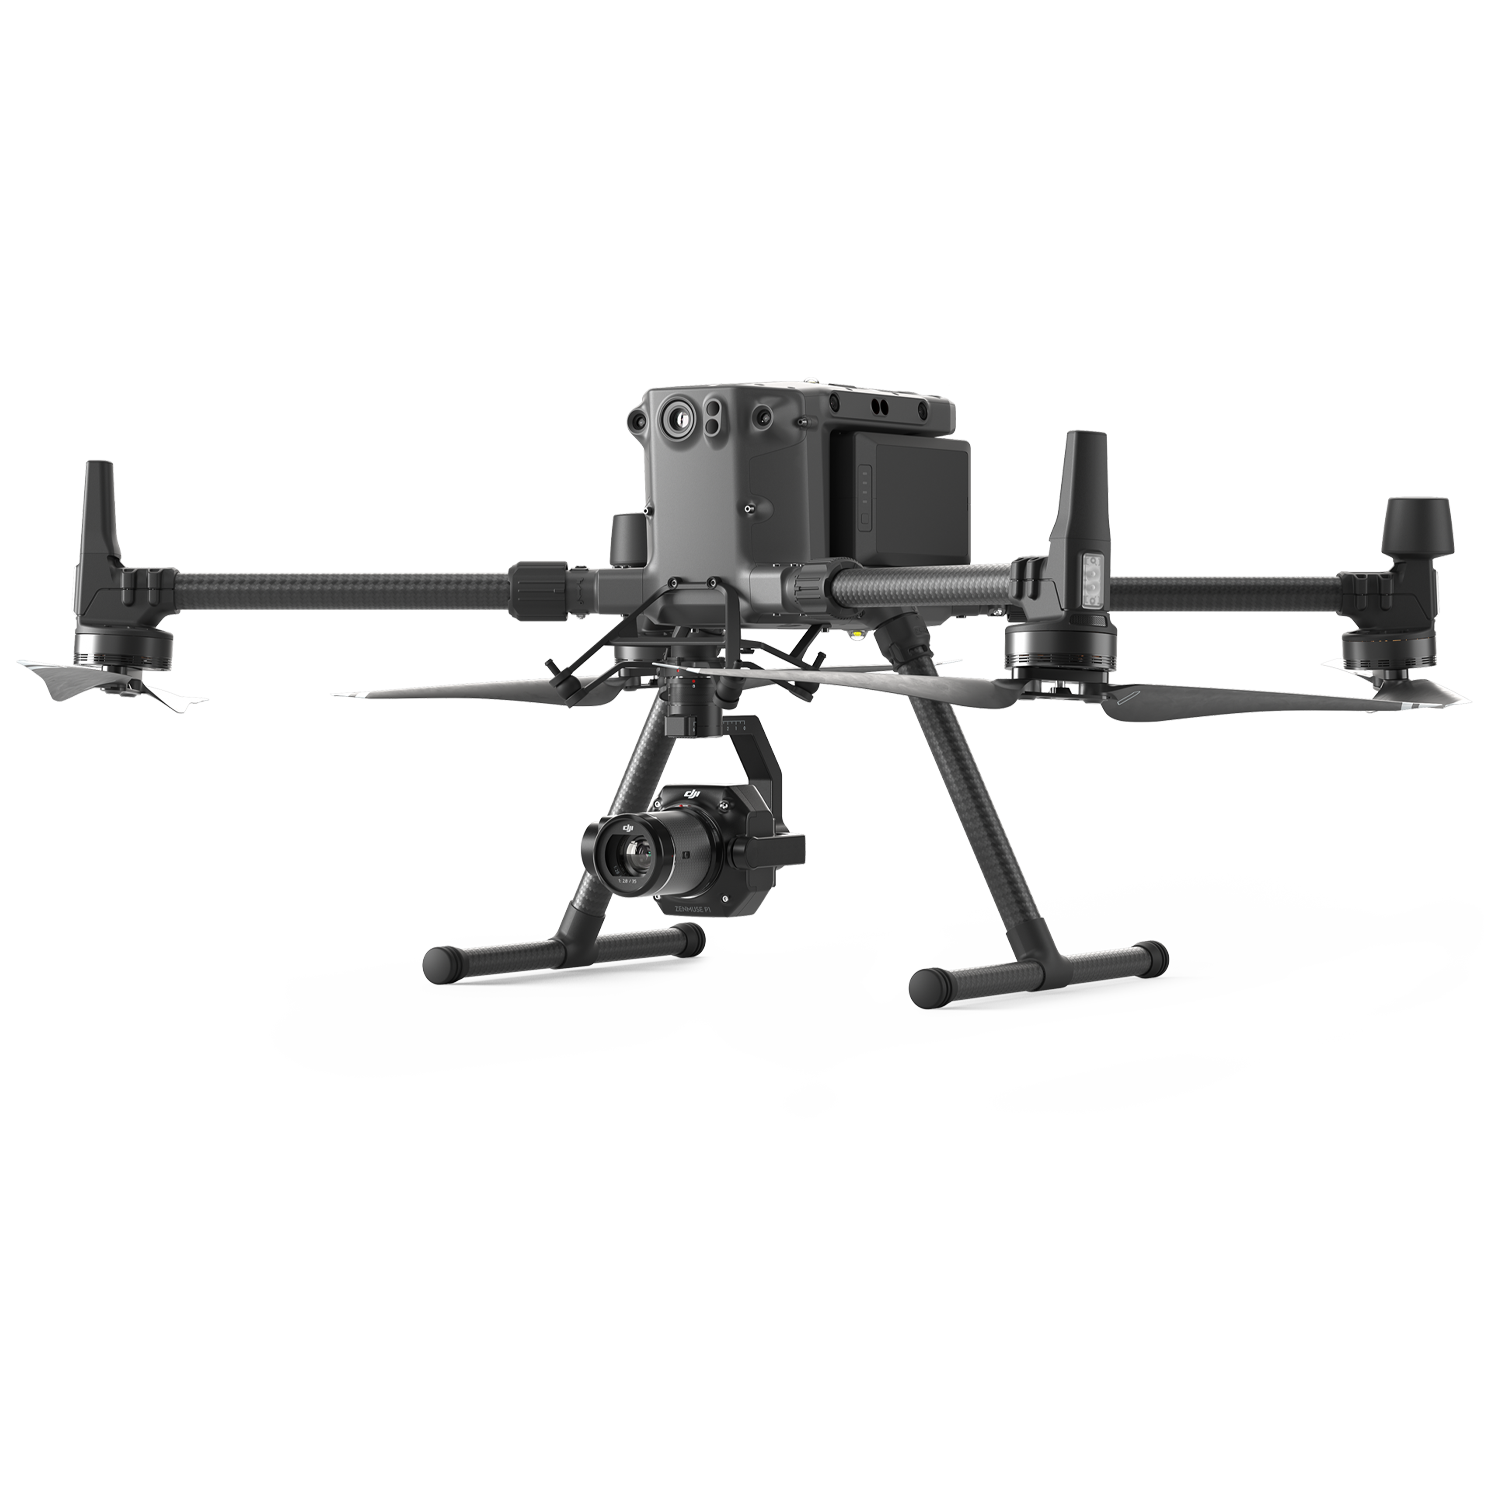 Zenmuse P1 - Cloud City Drones